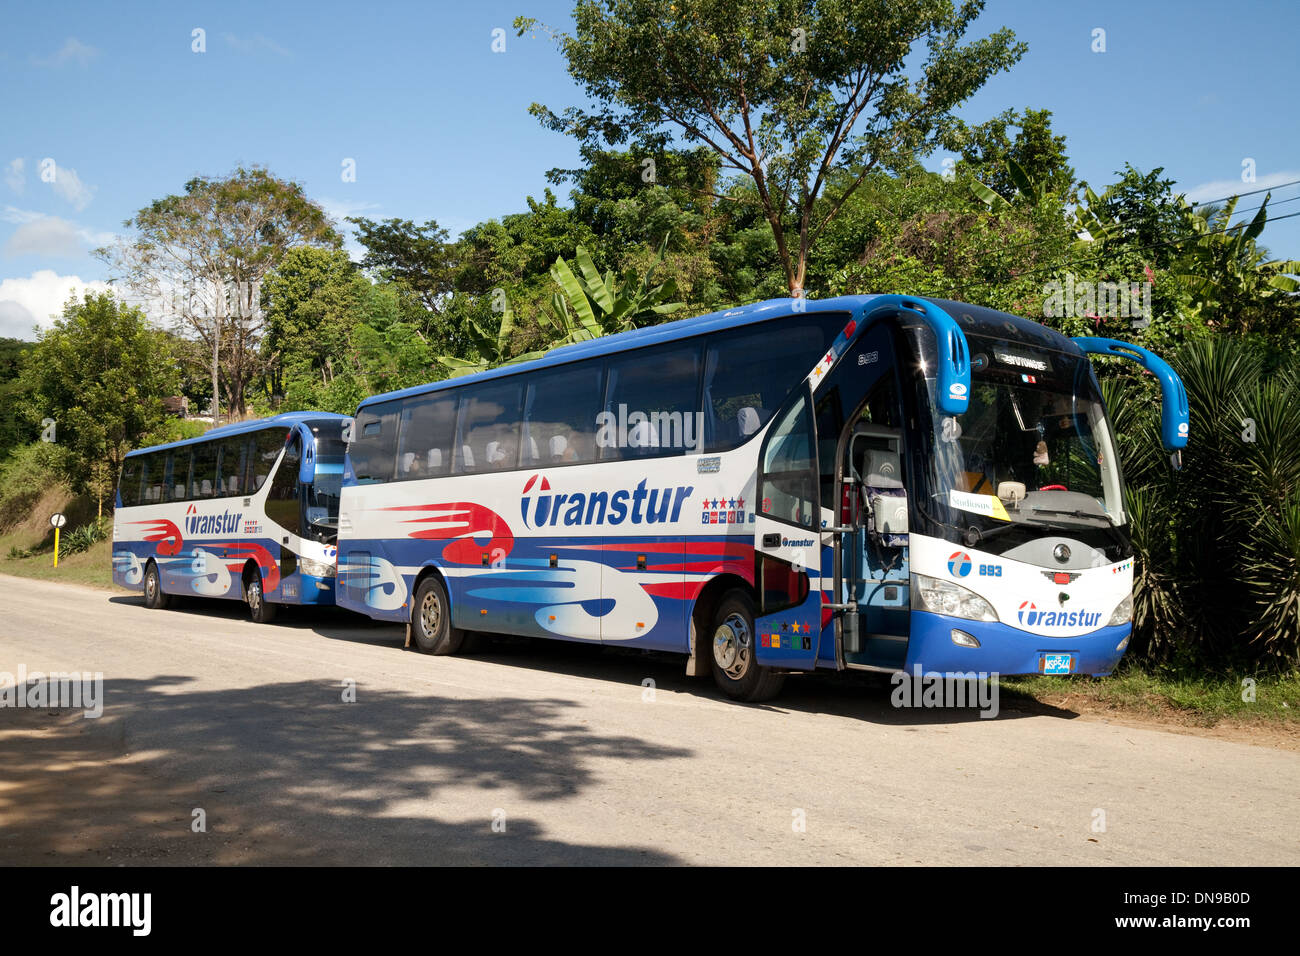 Two Transtur Coaches, a travel tour operator in Cuba, Caribbean, Latin America Stock Photo